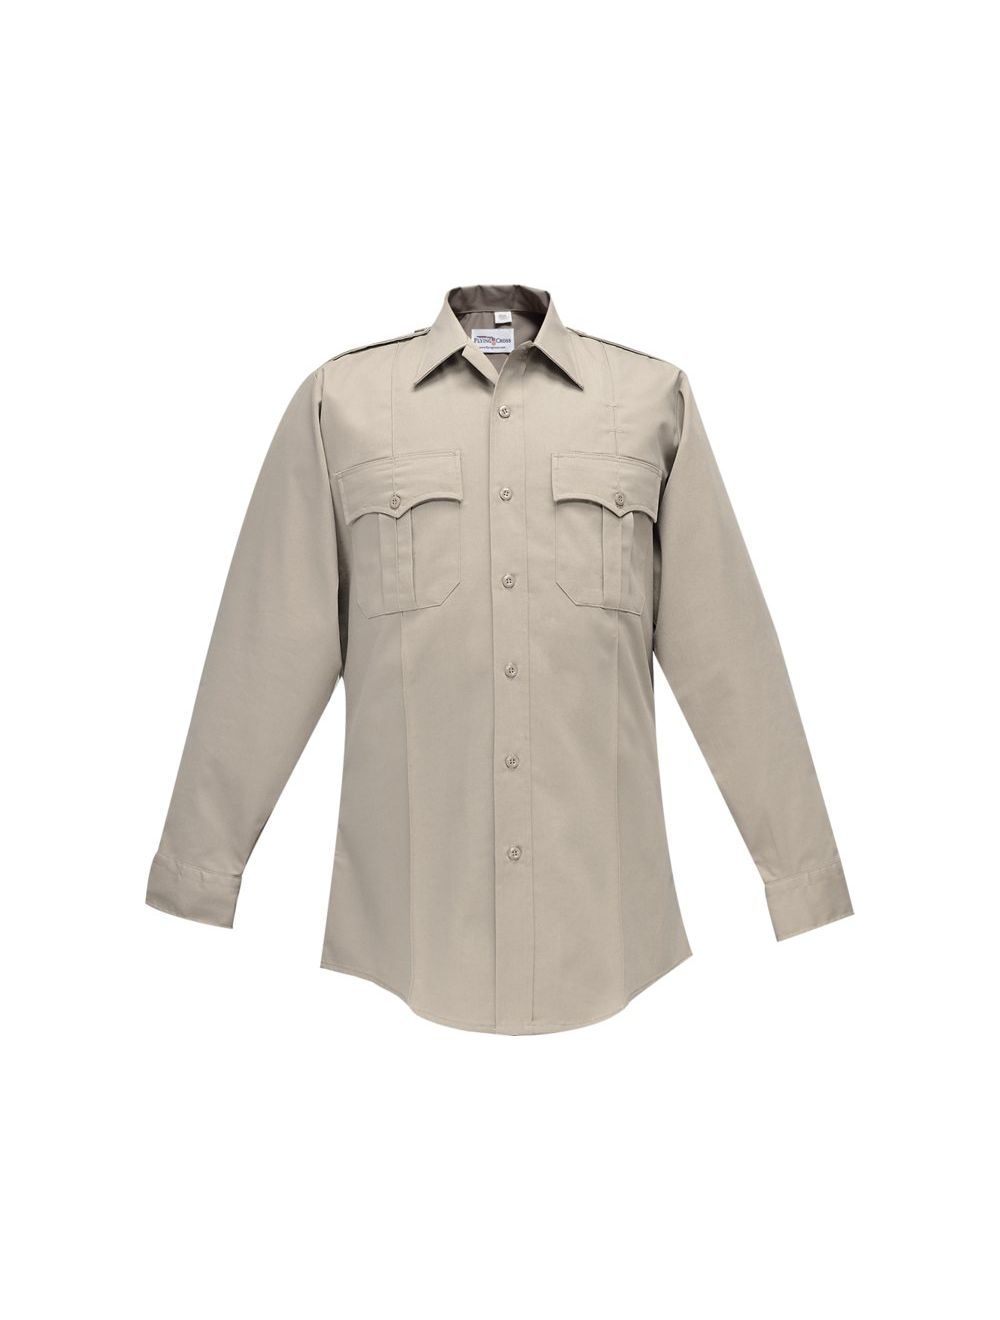 Flying Cross Command Long Sleeve Shirt with Zipper & Convertible Sport Collar - Silver Tan, 16.5 x 36-37